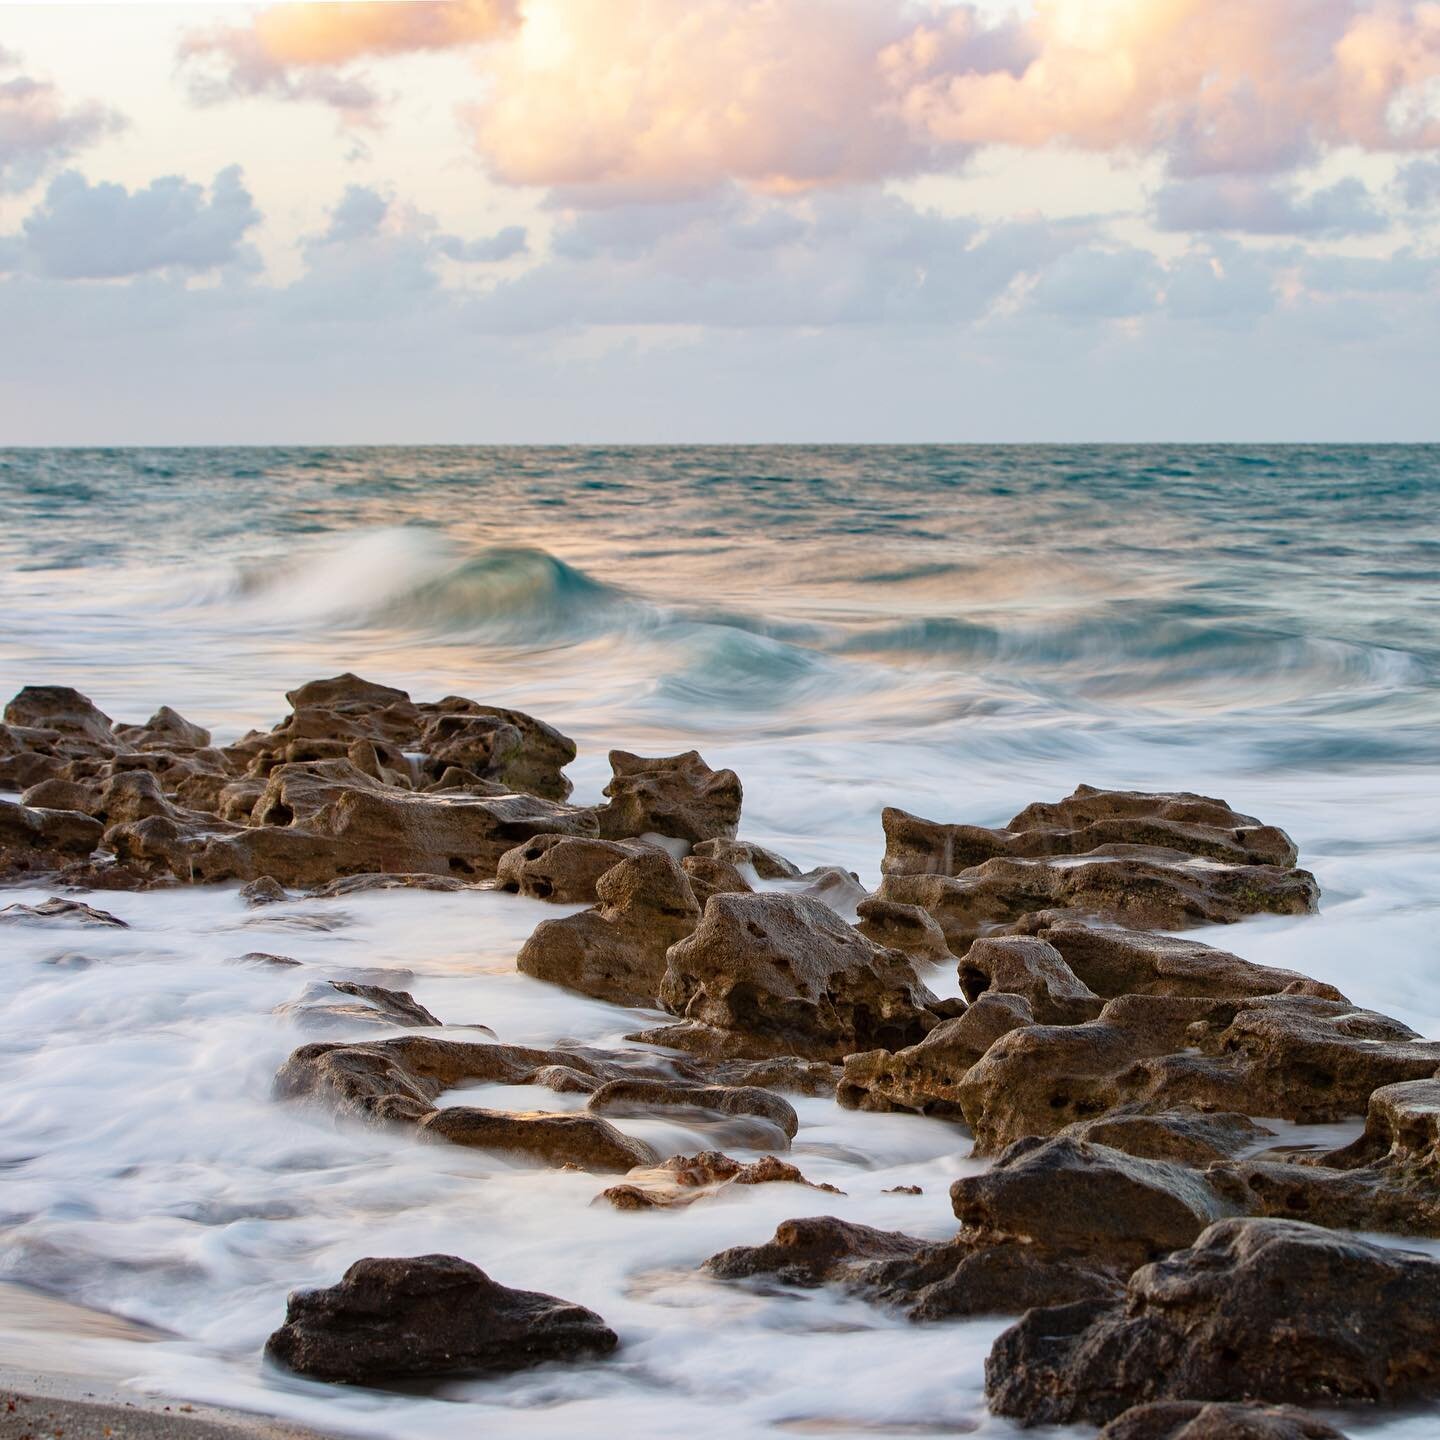 Solid as a rock. 🪨

#discoverjupiterfl #coralcovepark #pbcparks #longexposure #tequesta #tequestafl #jupiterisland #explorida #beachlife #beachlover #coastalliving #floridahorizon #oceandreaming #lovefl #pureflorida #staysaltyflorida #onlyinflorida 